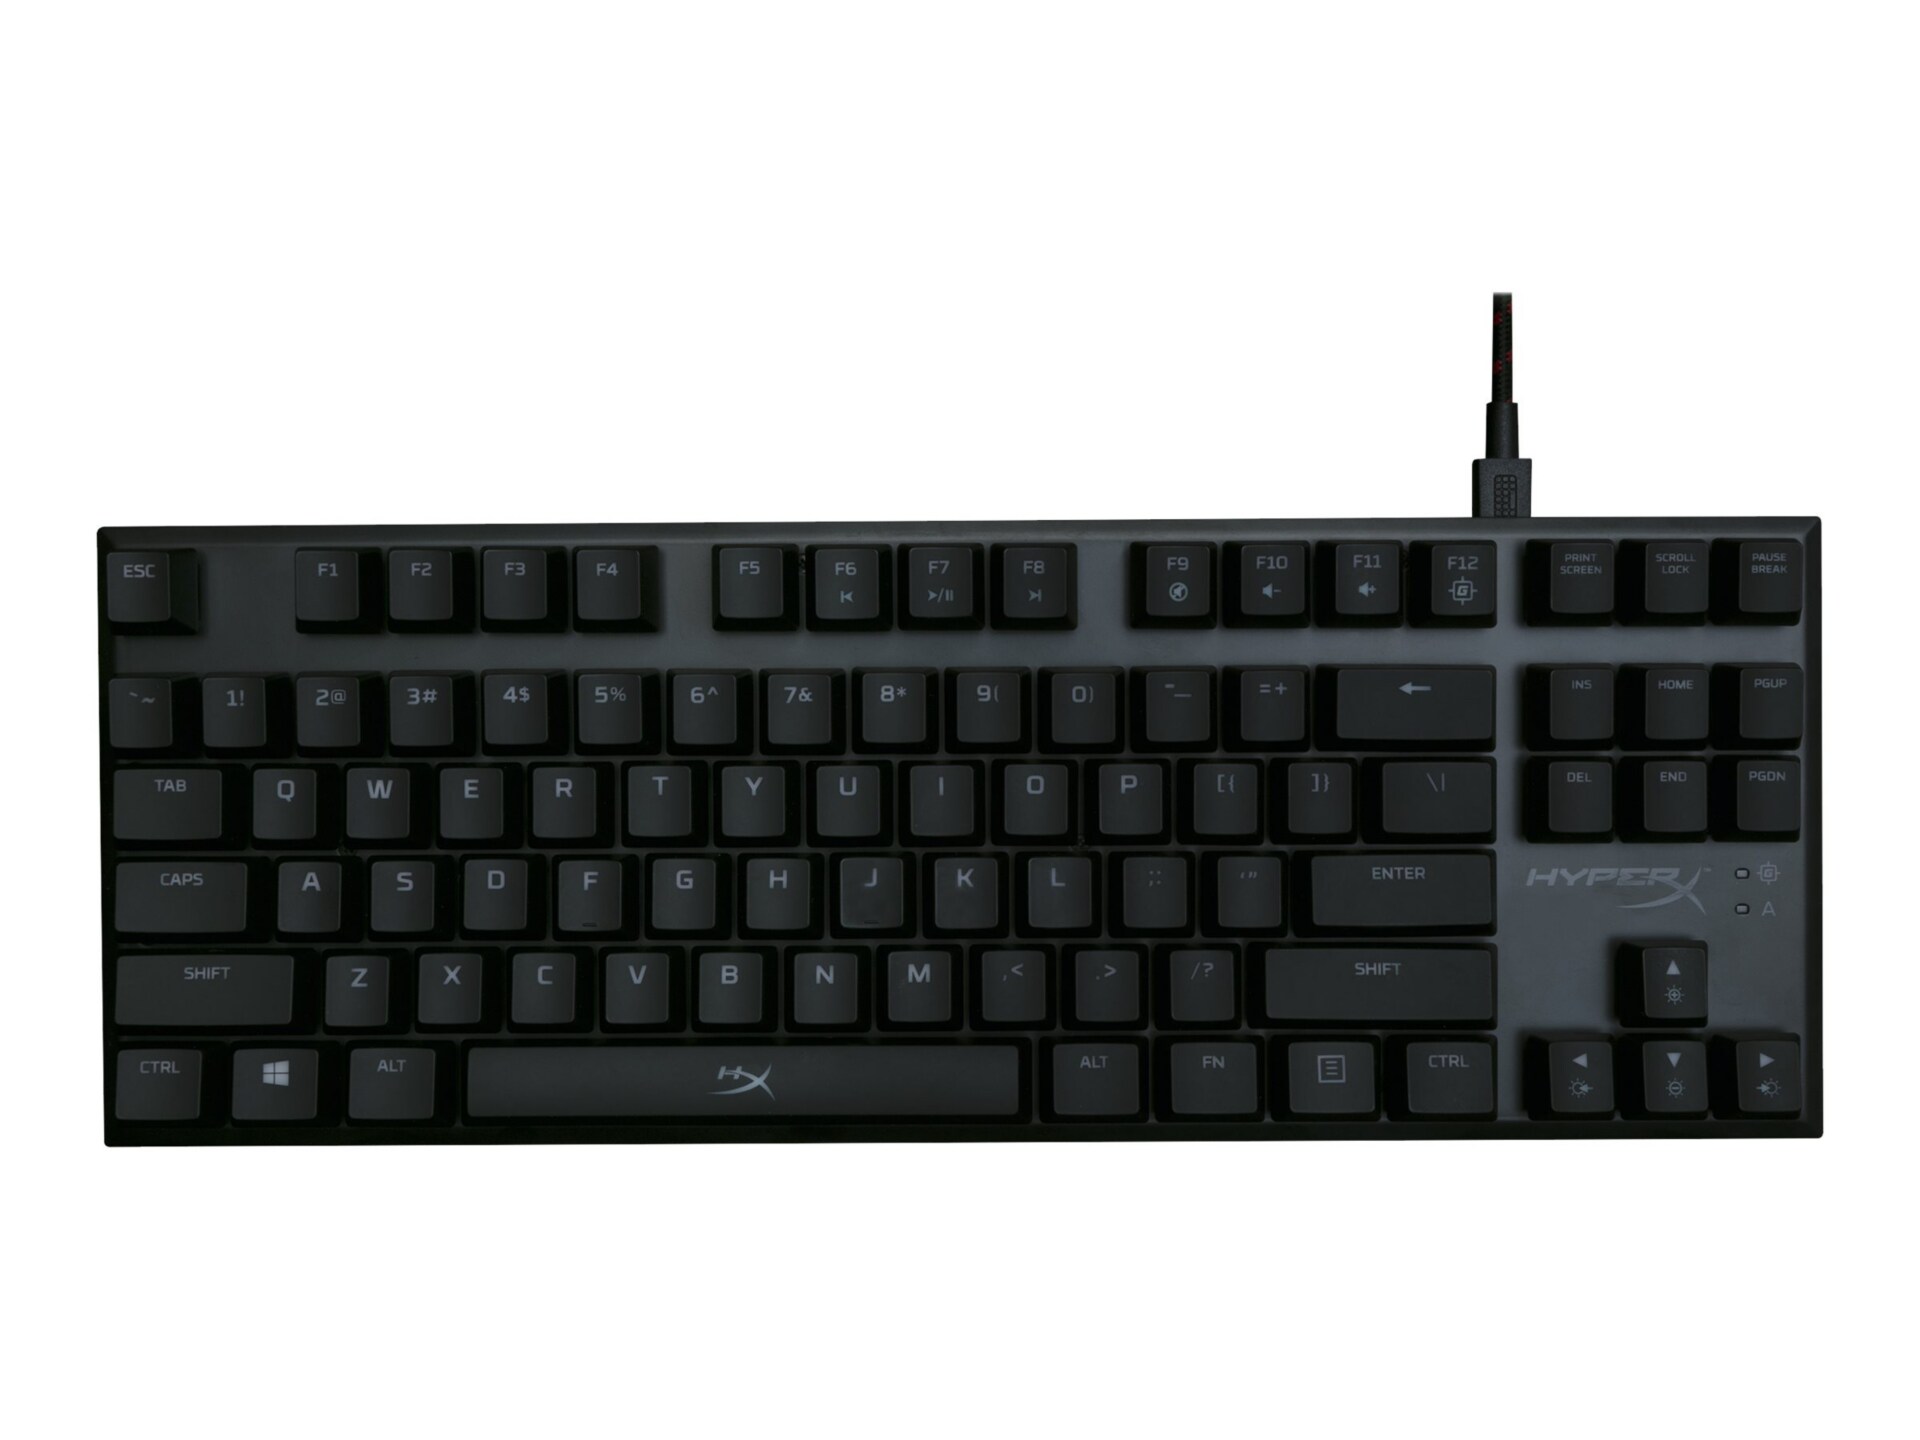 HyperX Alloy FPS Pro Mechanical Gaming - keyboard - English - US